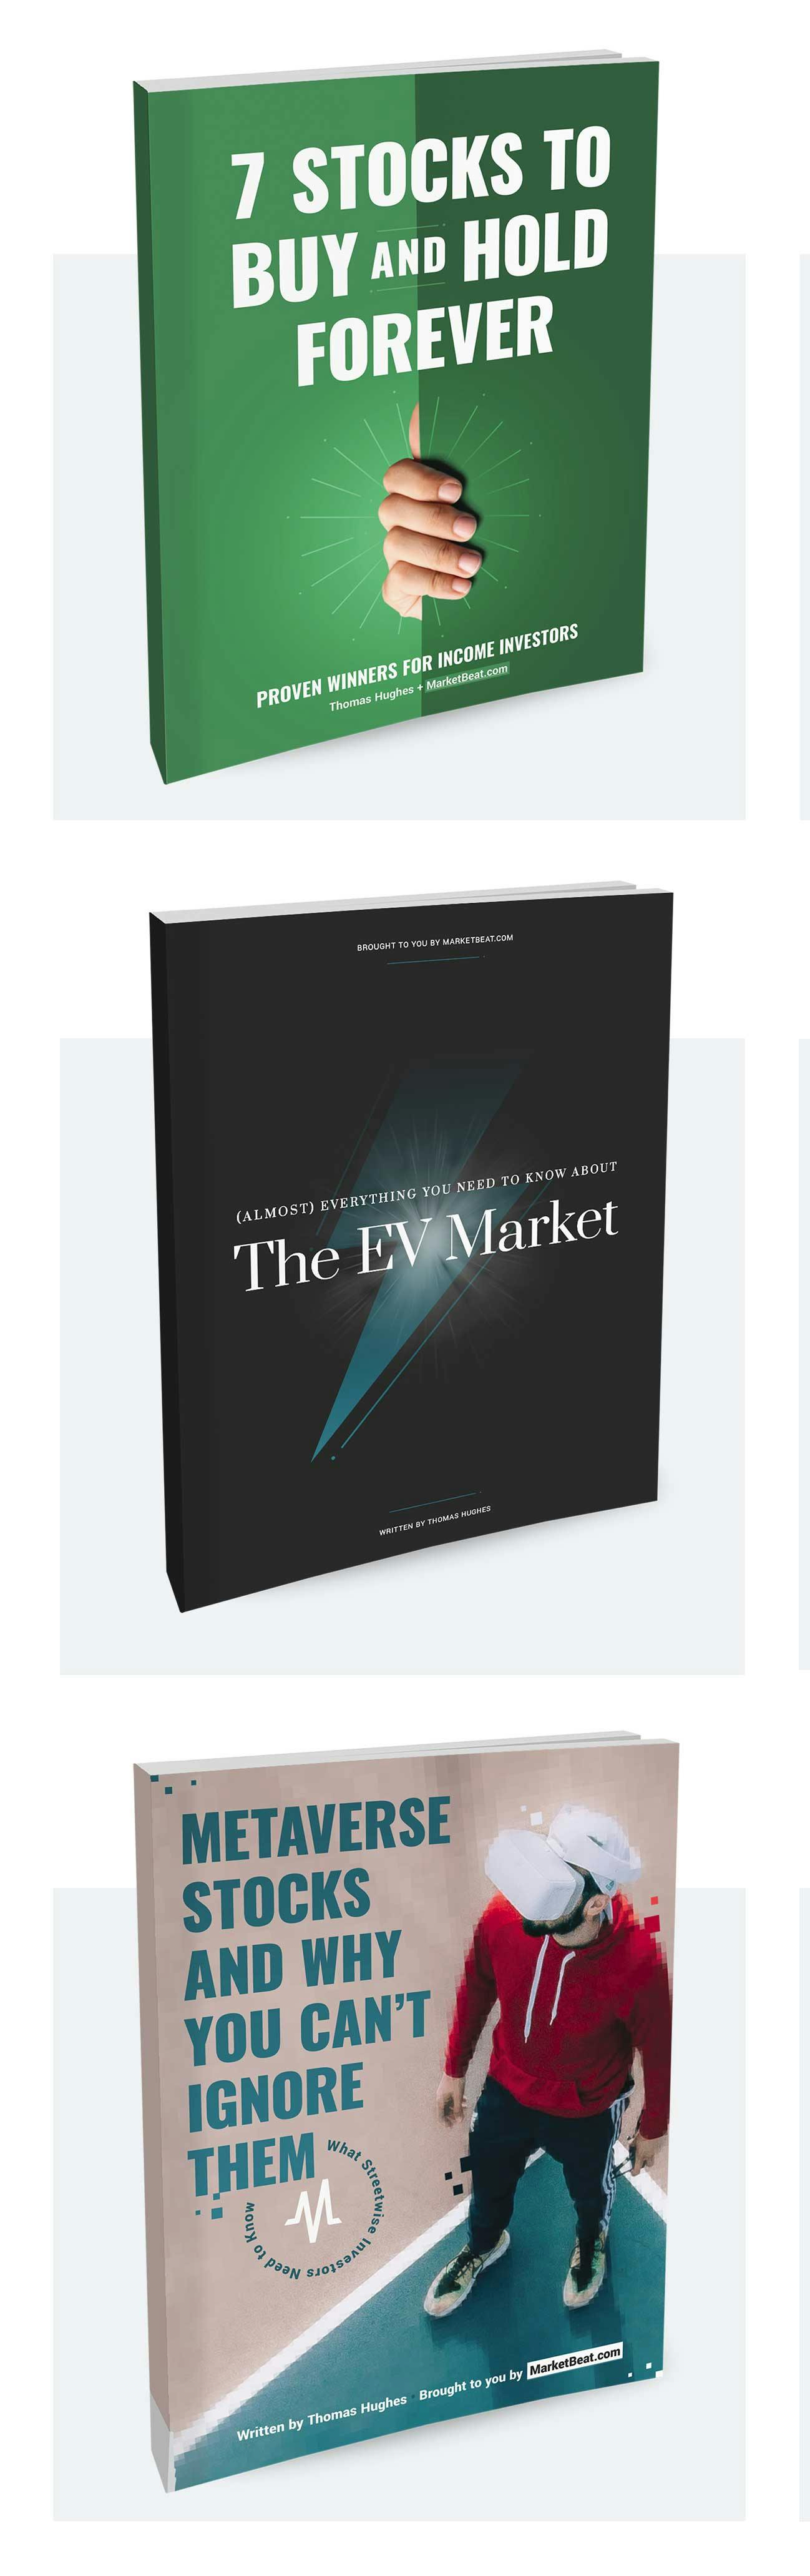 Marketbeat ebook covers mobile